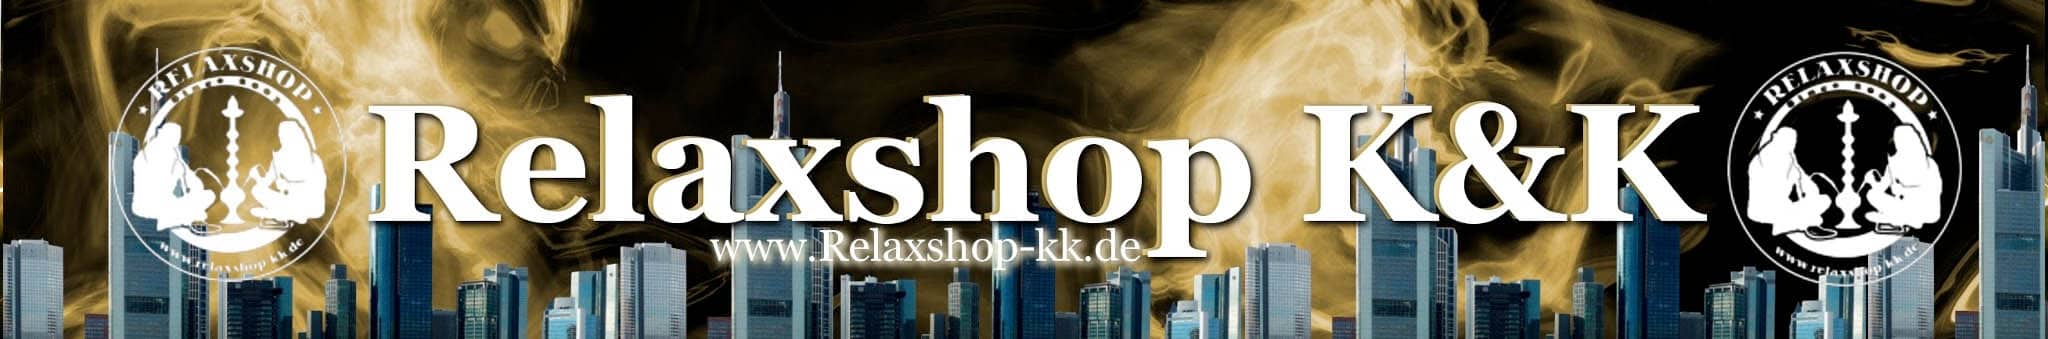 Relaxshop K&K Online Shop